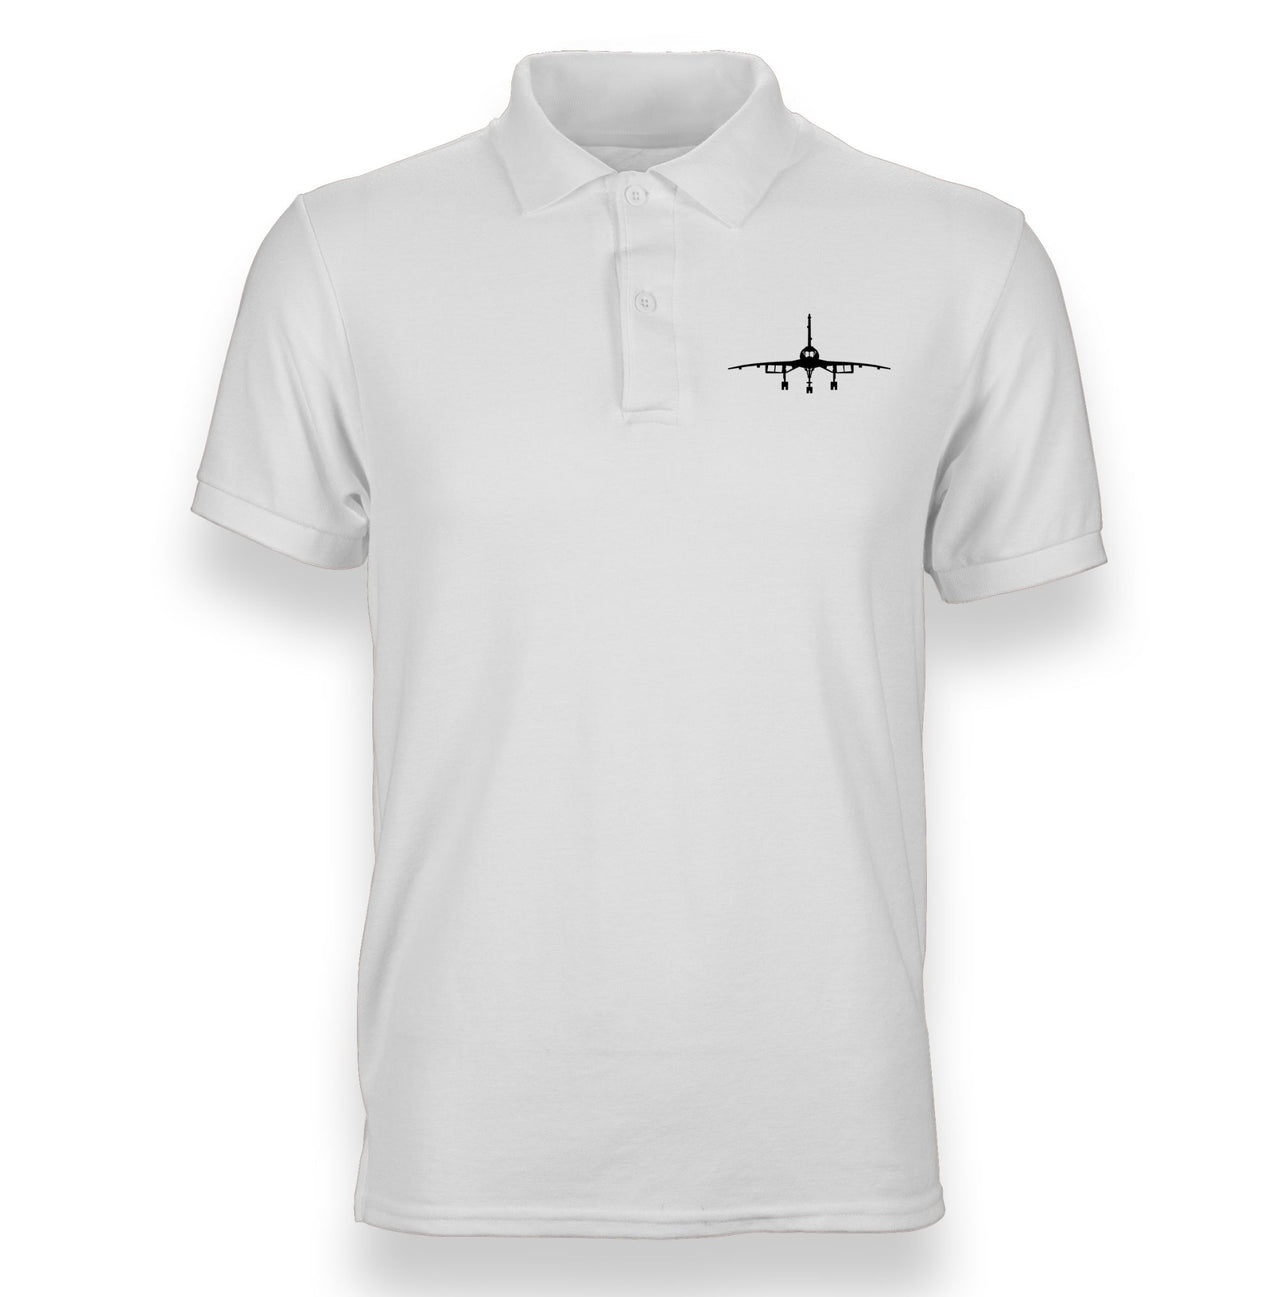 Concorde Silhouette Designed "WOMEN" Polo T-Shirts